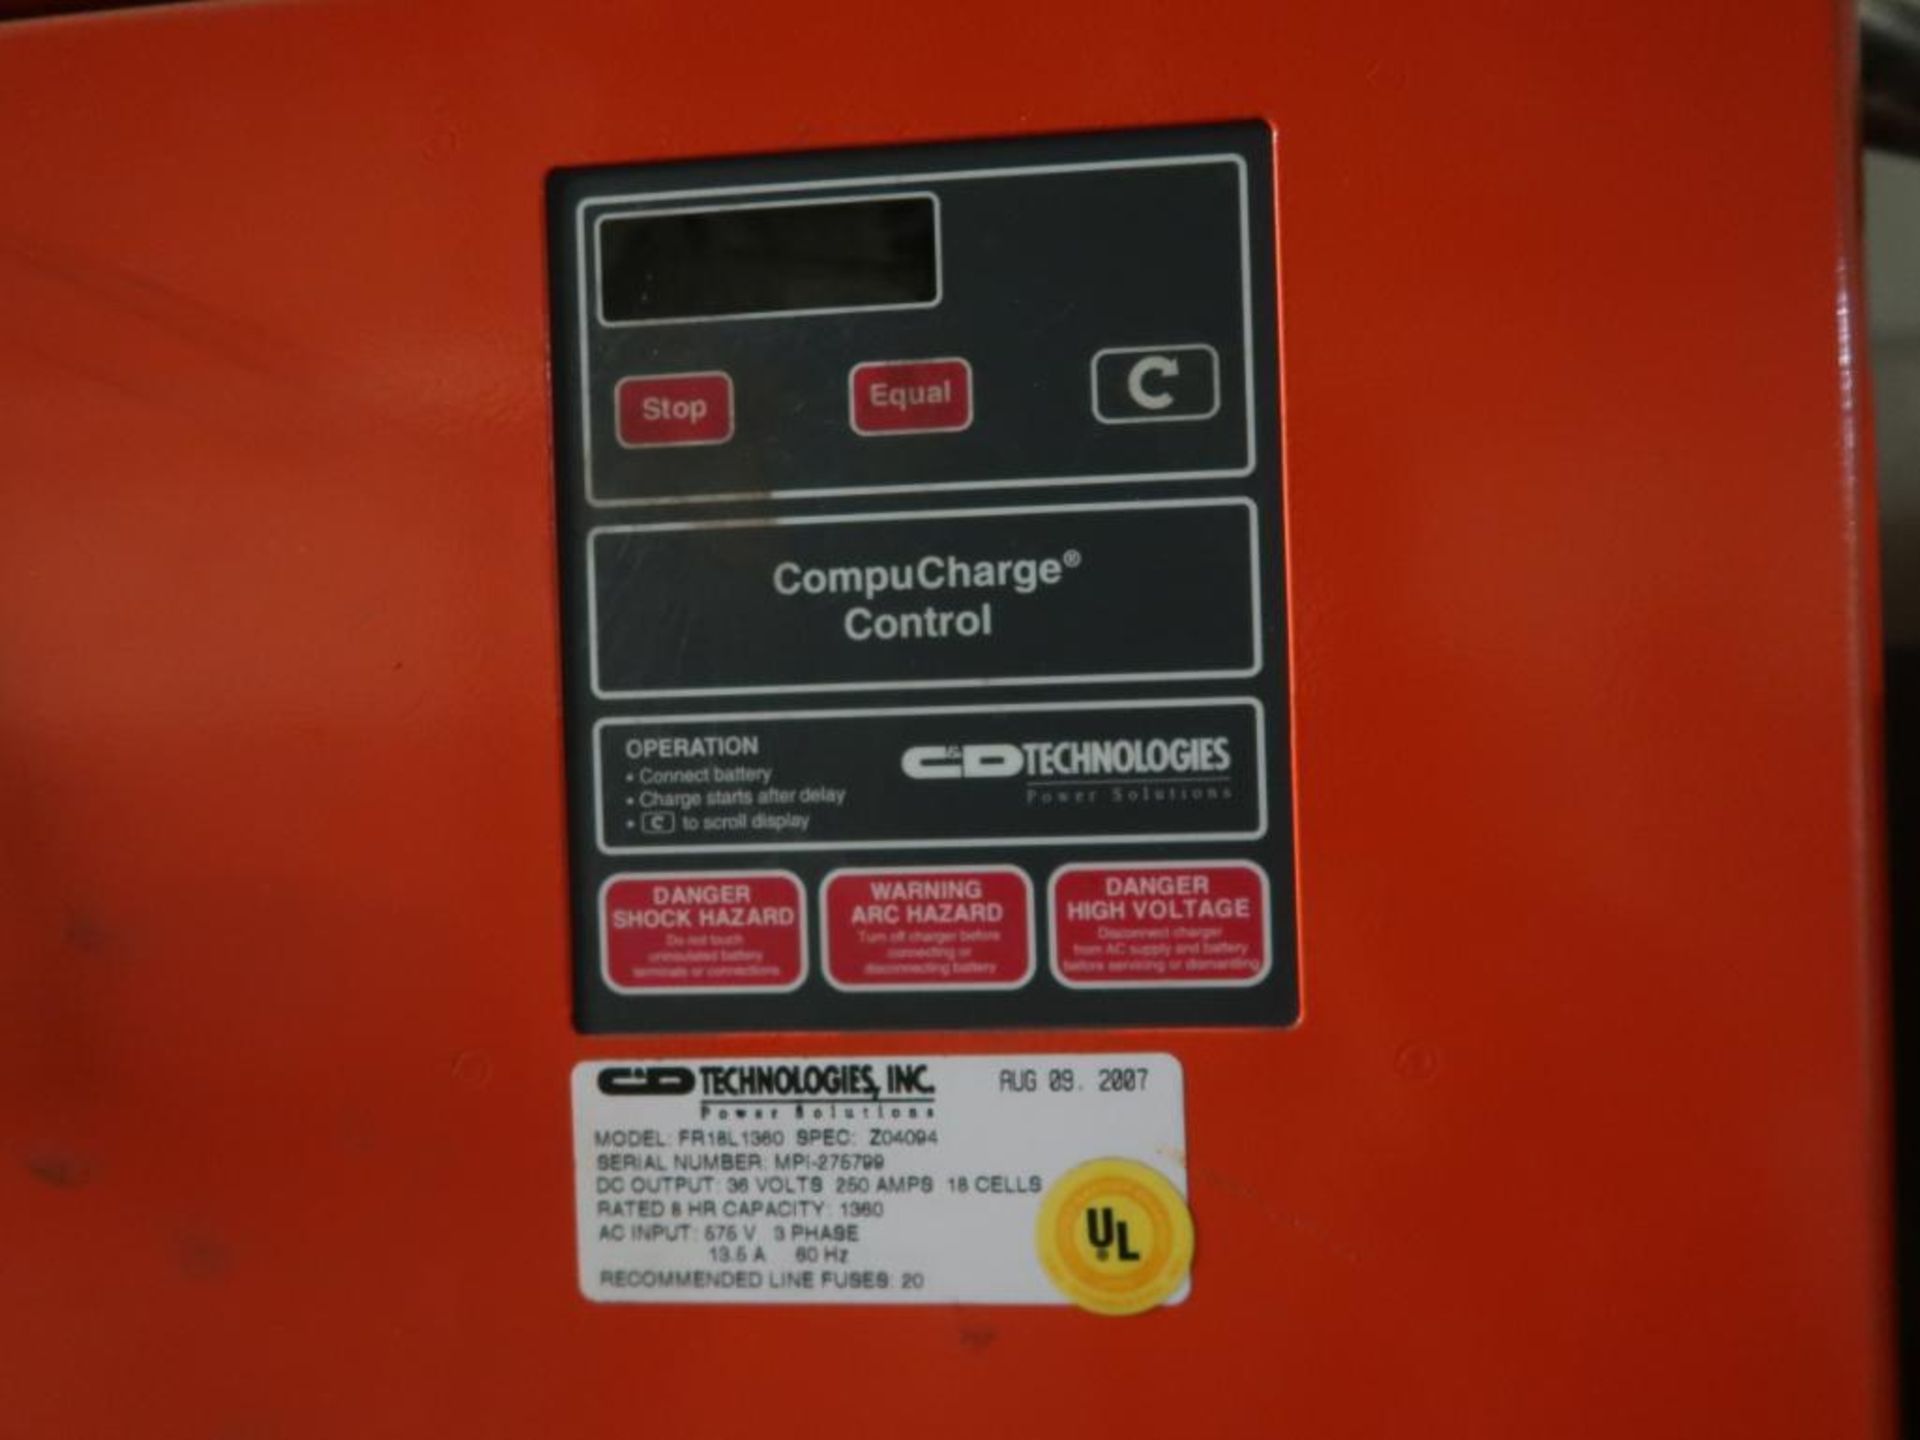 CD Technologies Ferror Five FR Series Battery Charger Model FR18L1360, 36 Volt - Image 2 of 2